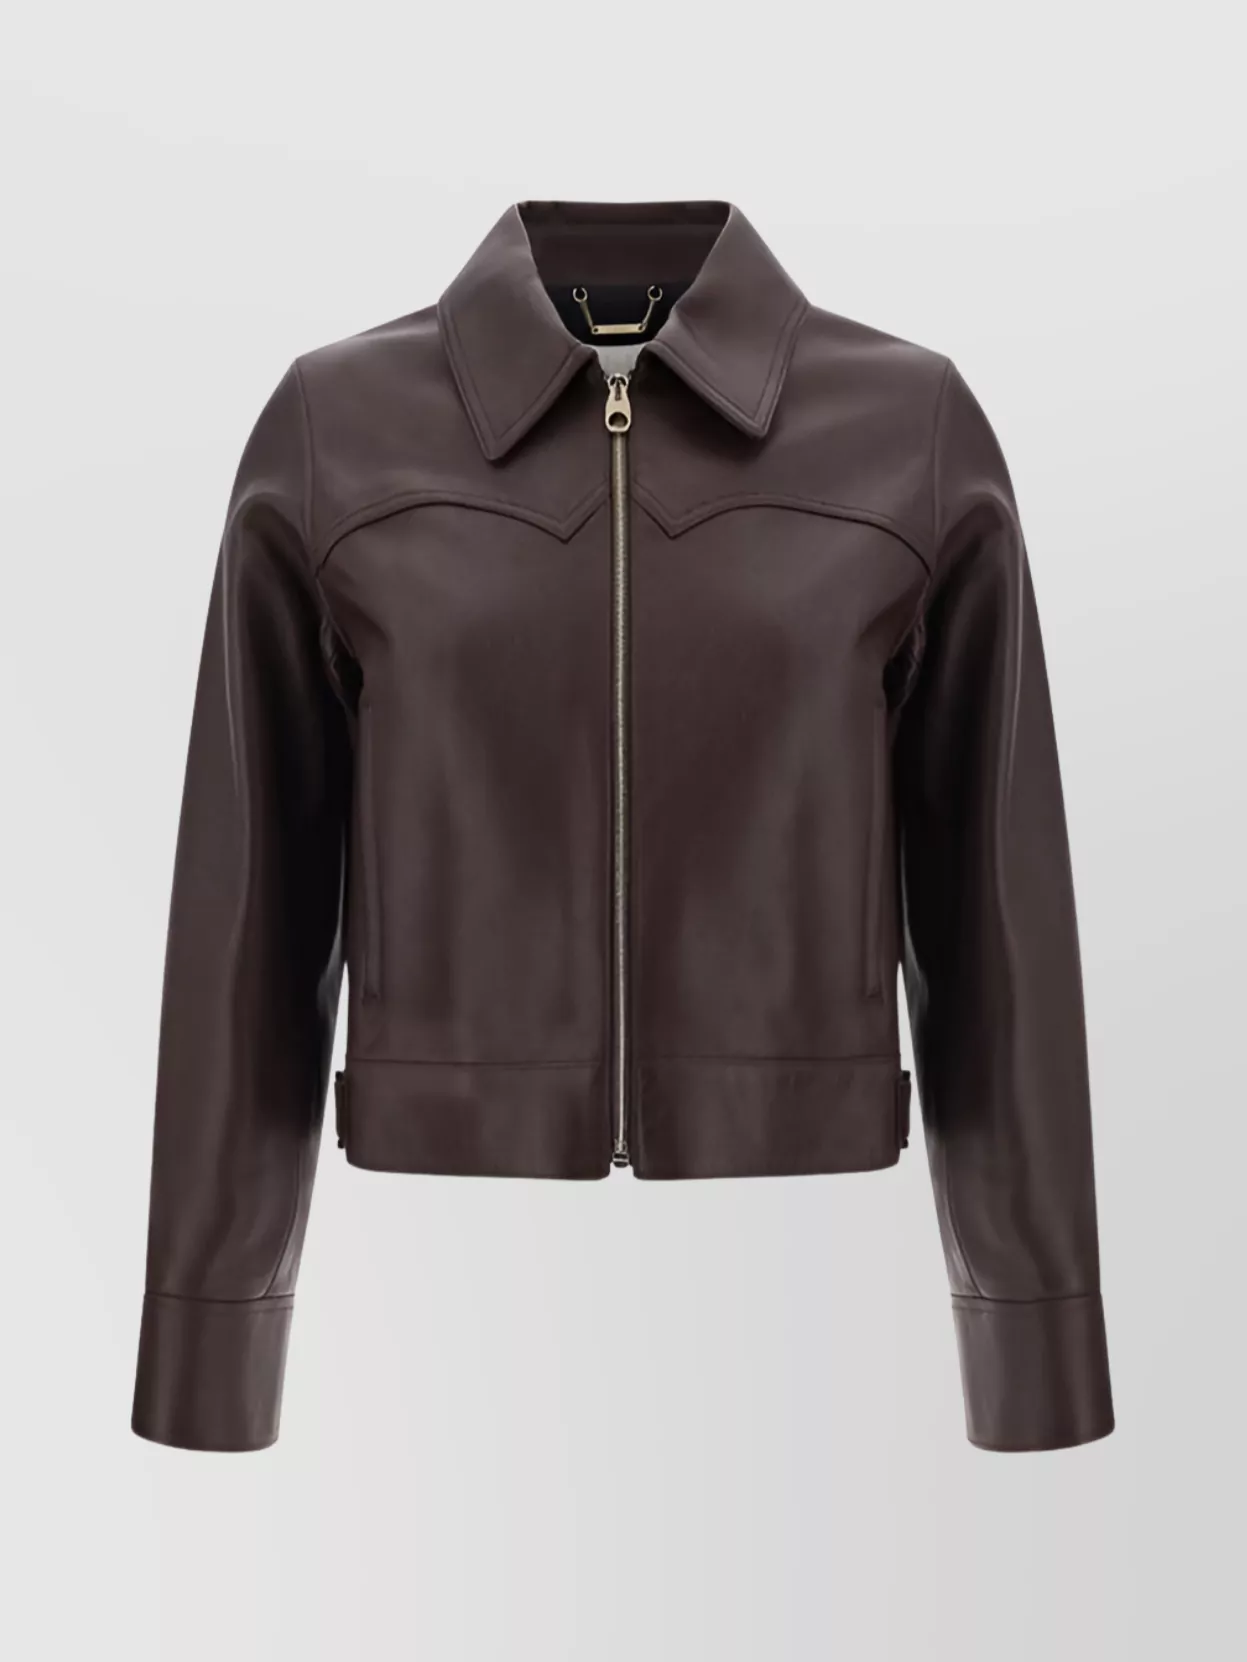 Chloé Leather Jacket Adjustable Straps